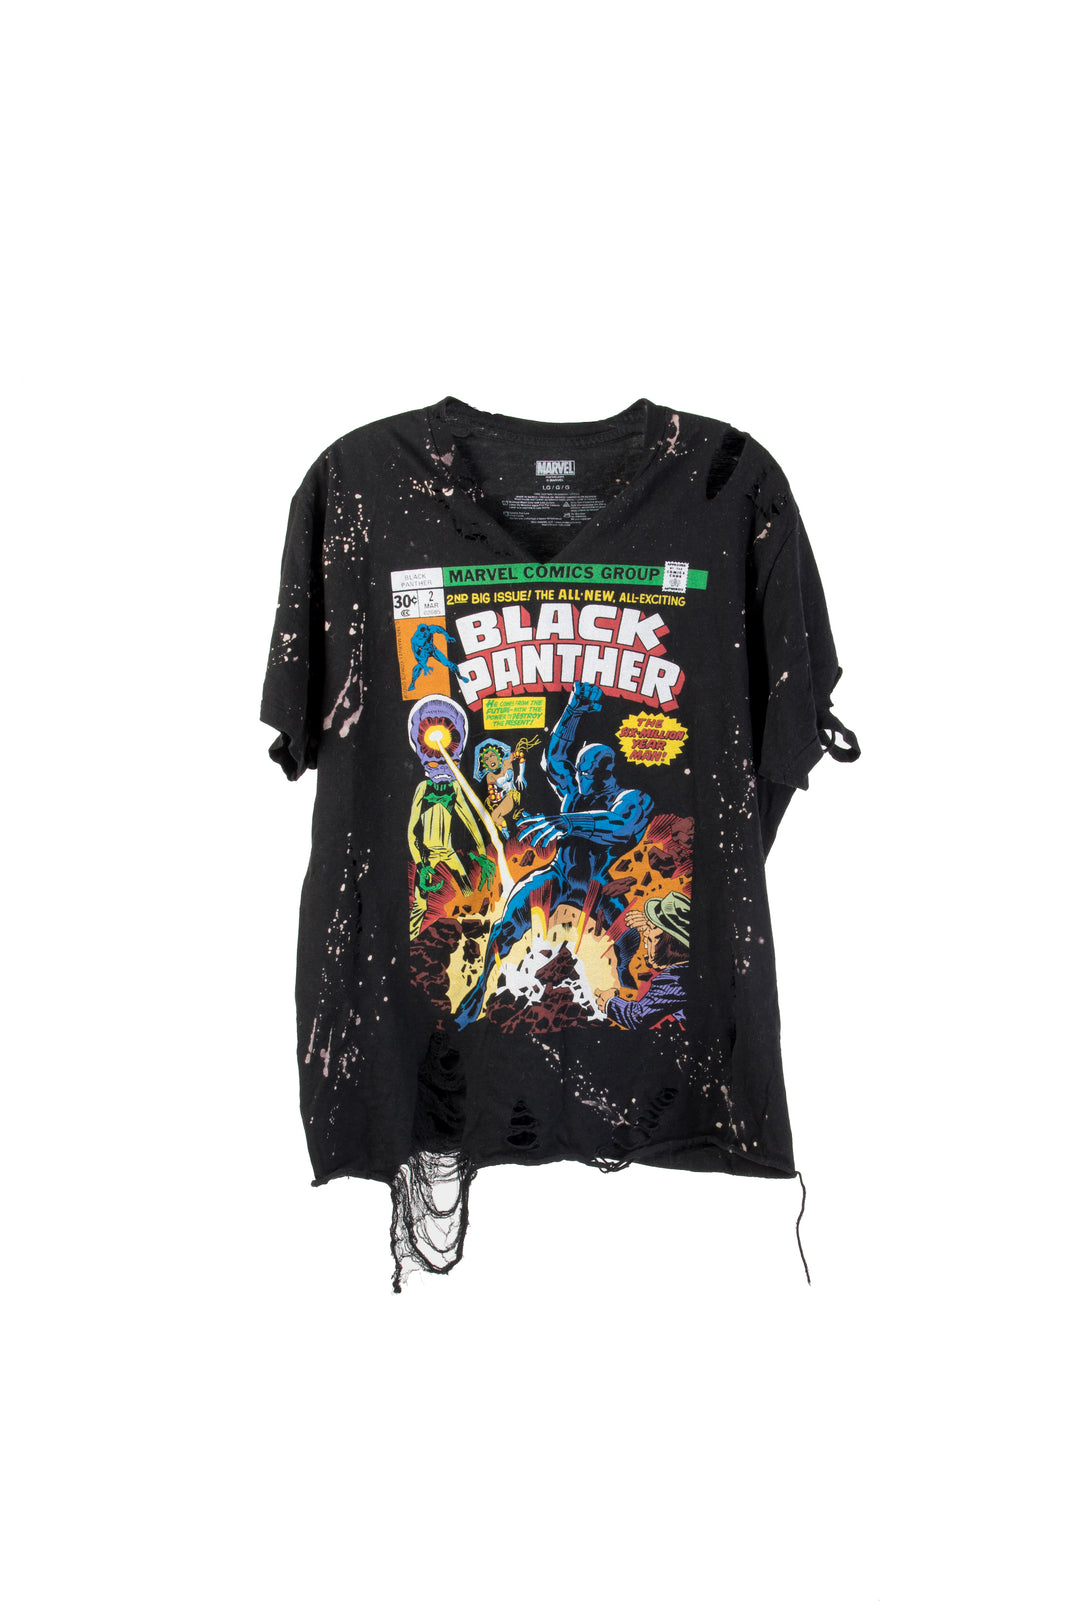 Distressed Black Panther T-Shirt